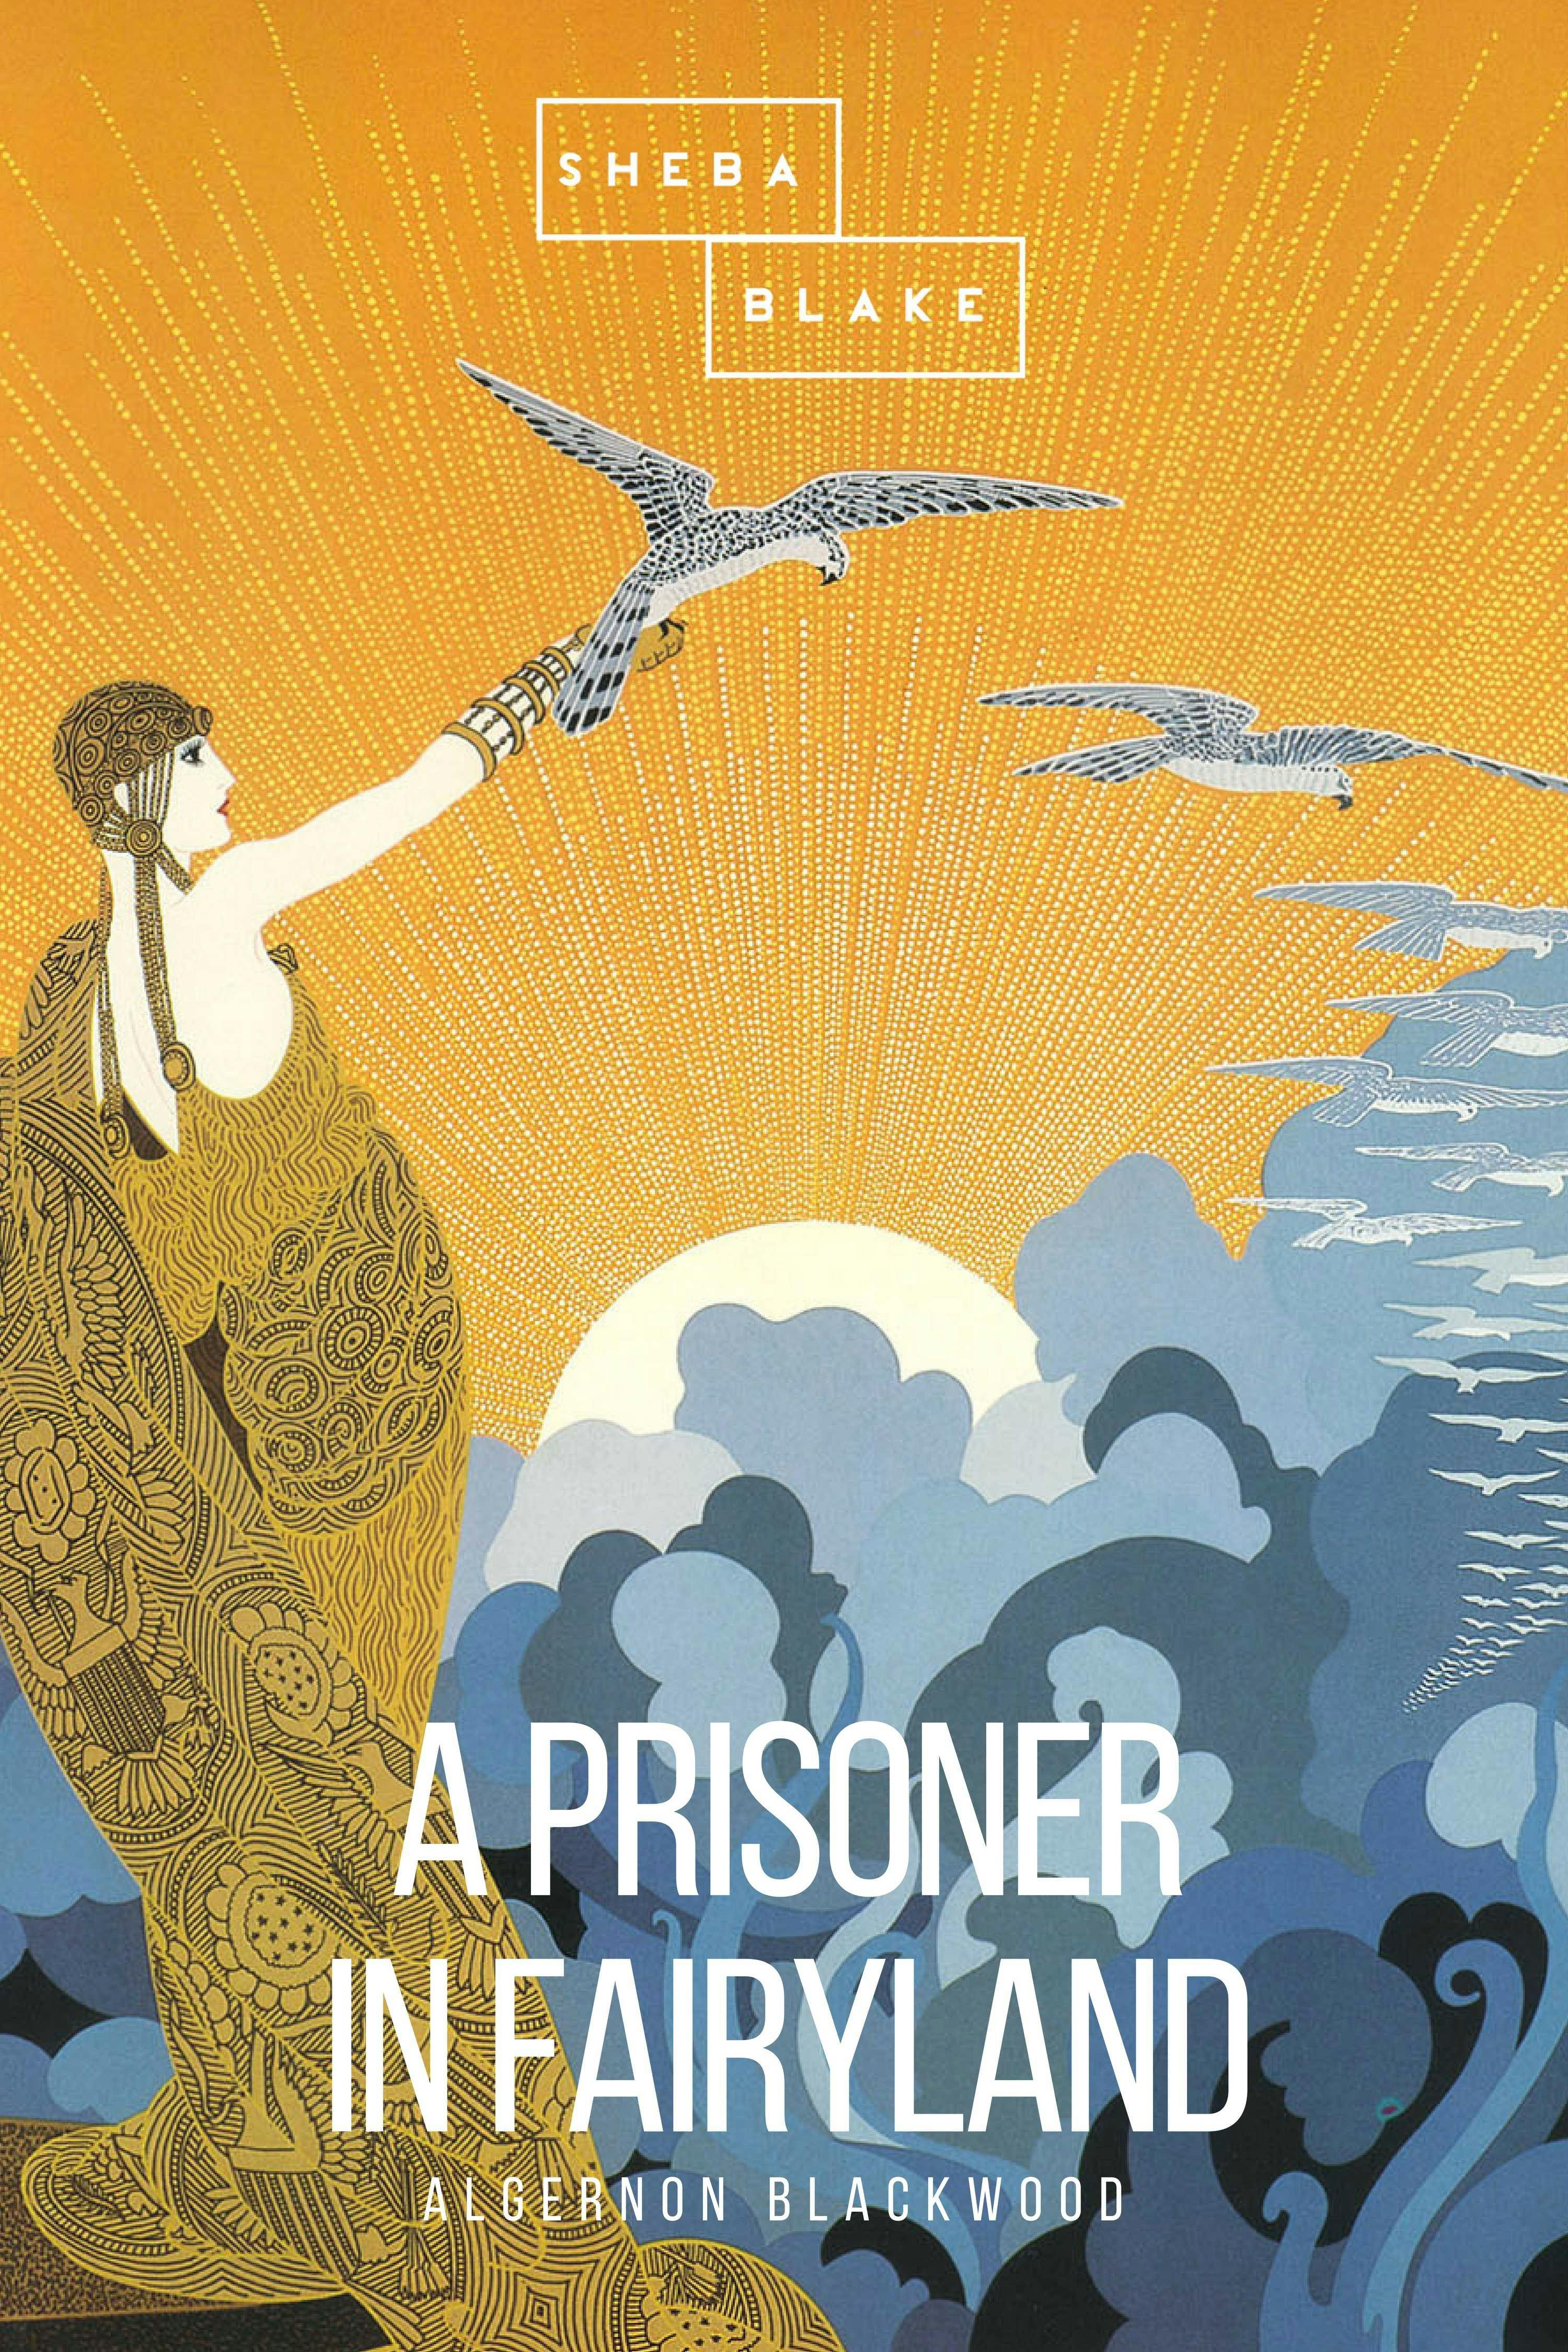 A Prisoner in Fairyland - Algernon Blackwoo, Sheba Blake